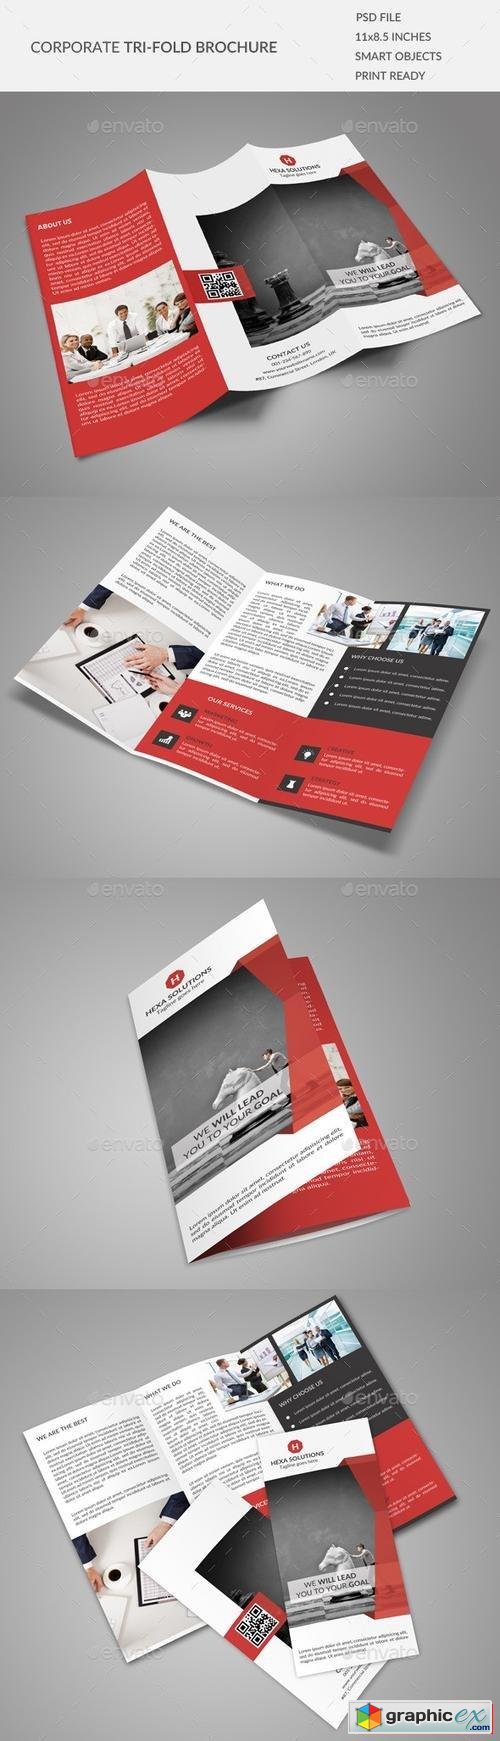 Corporate Tri-fold Brochure 02 